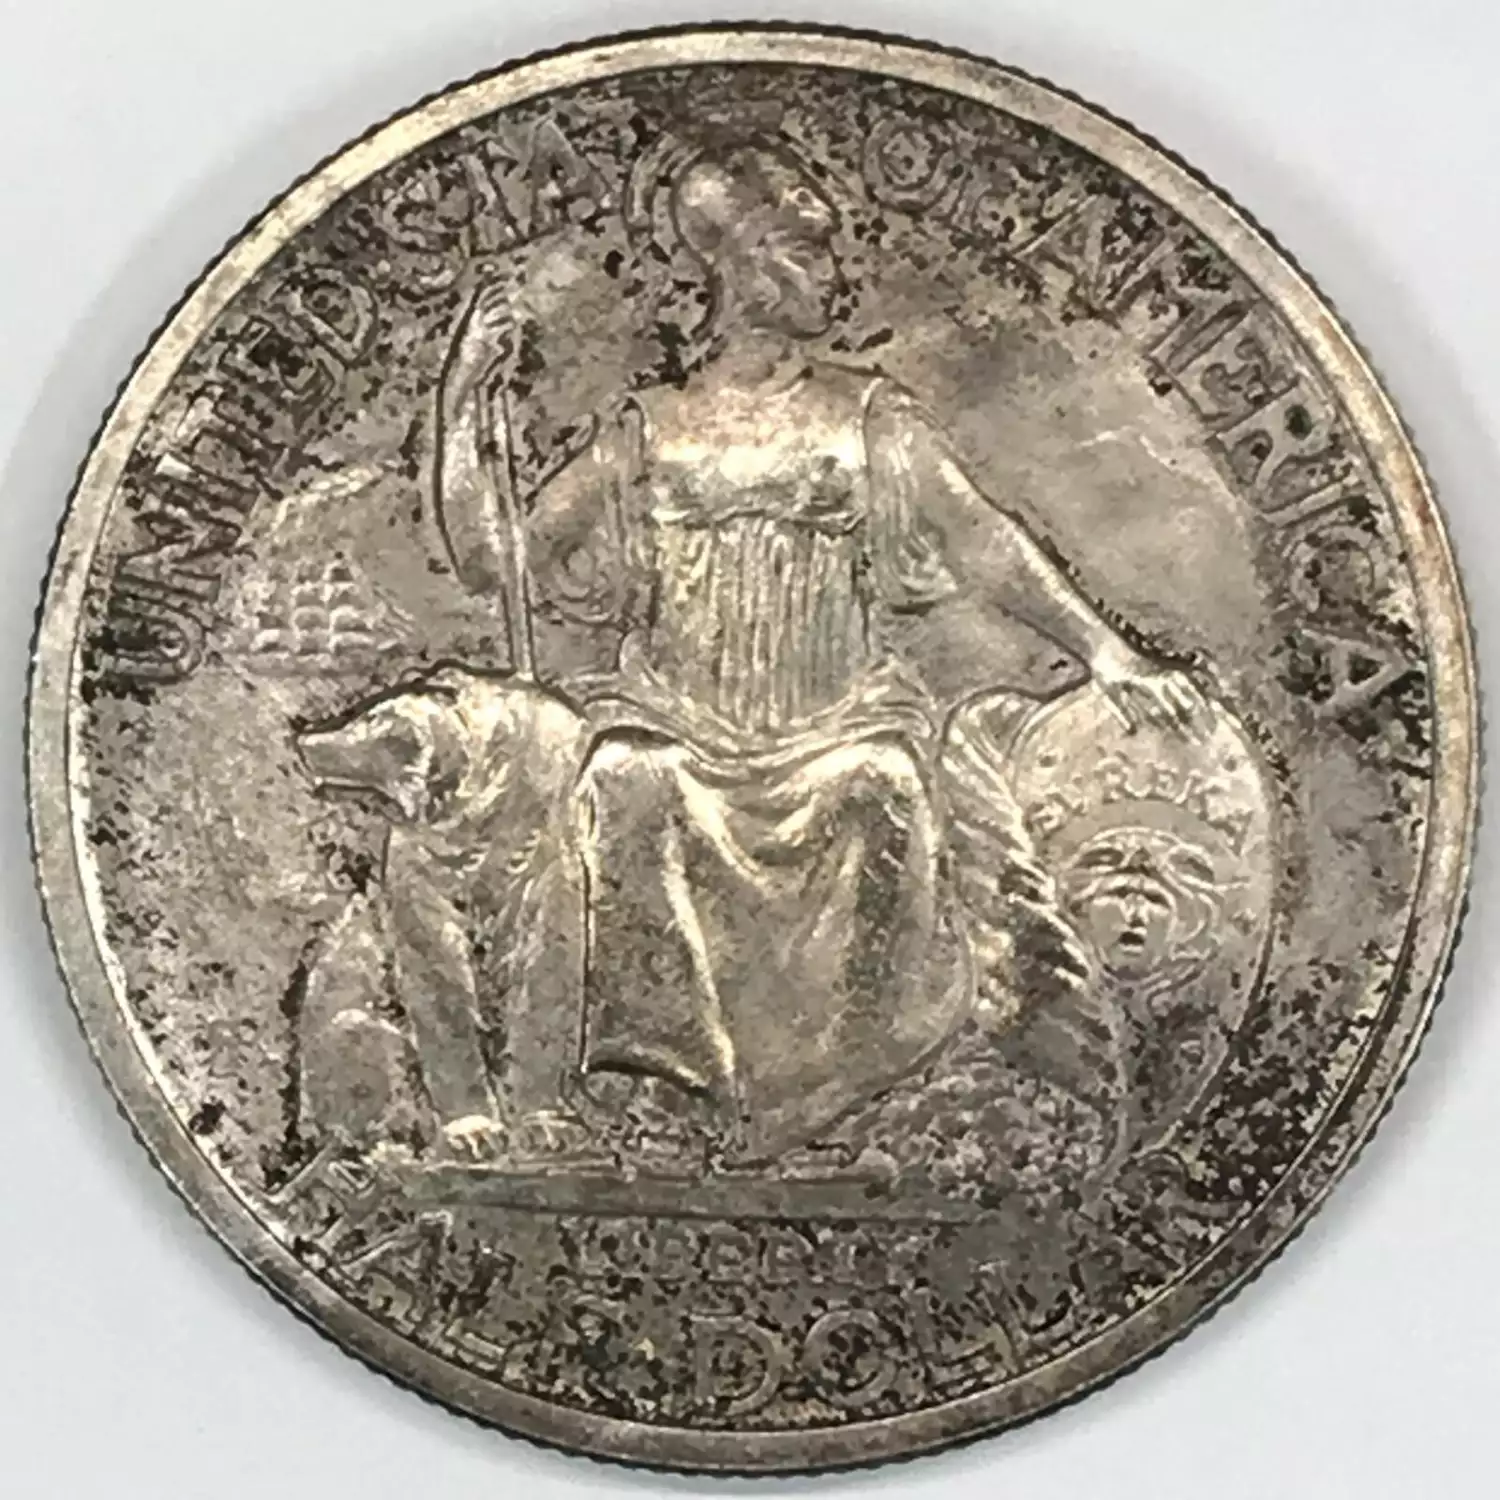 Classic Commemorative Silver--- San Diego California Pacific International Exposition 1935-1936-Silver- 0.5 Dollar